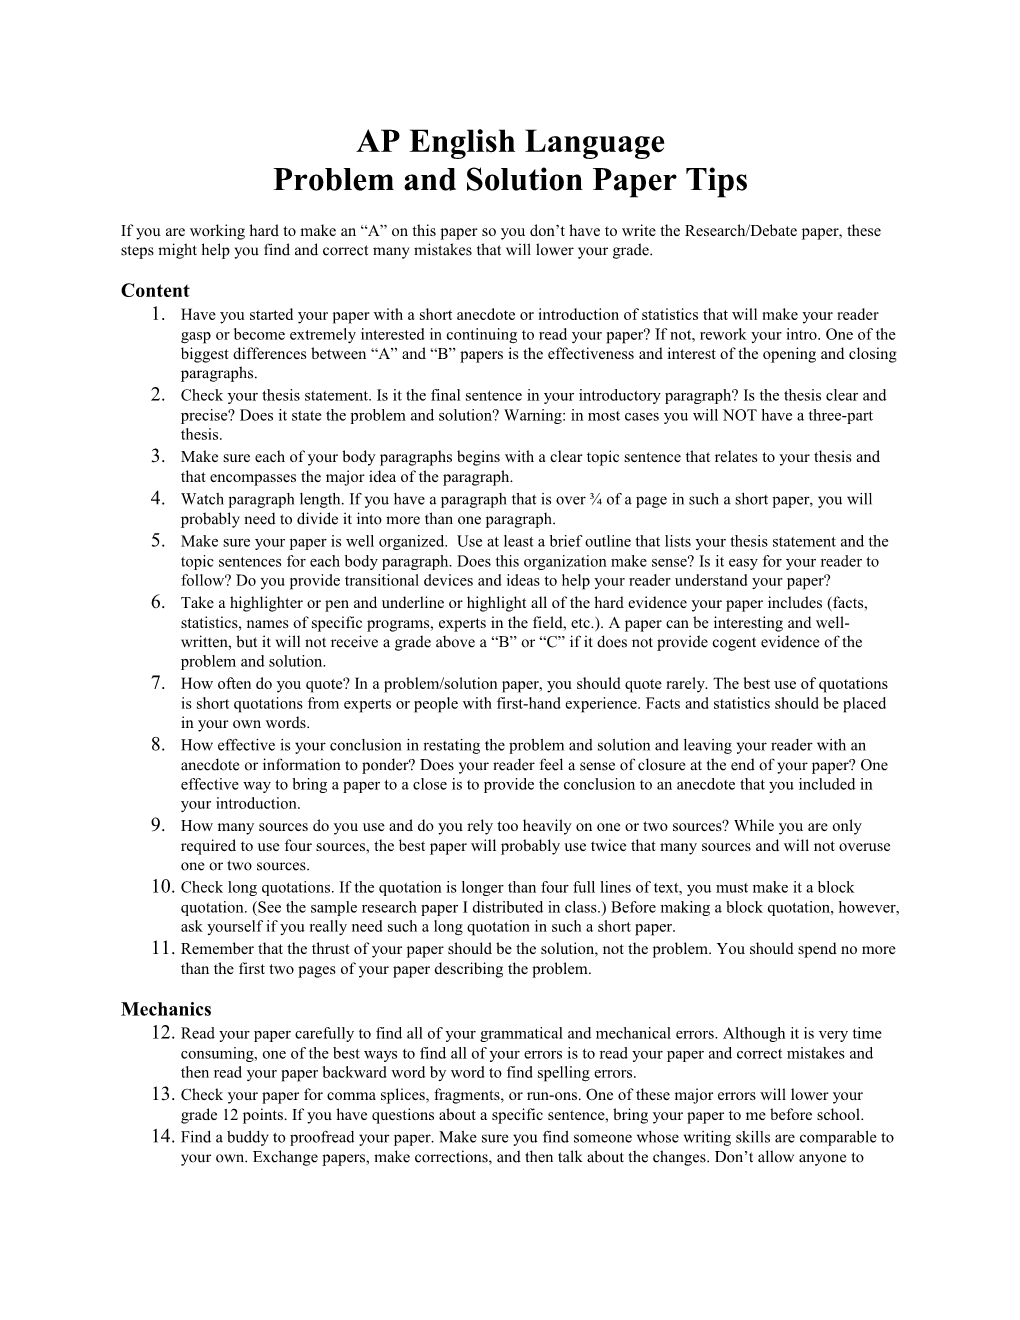 AP English Language Paper Revision